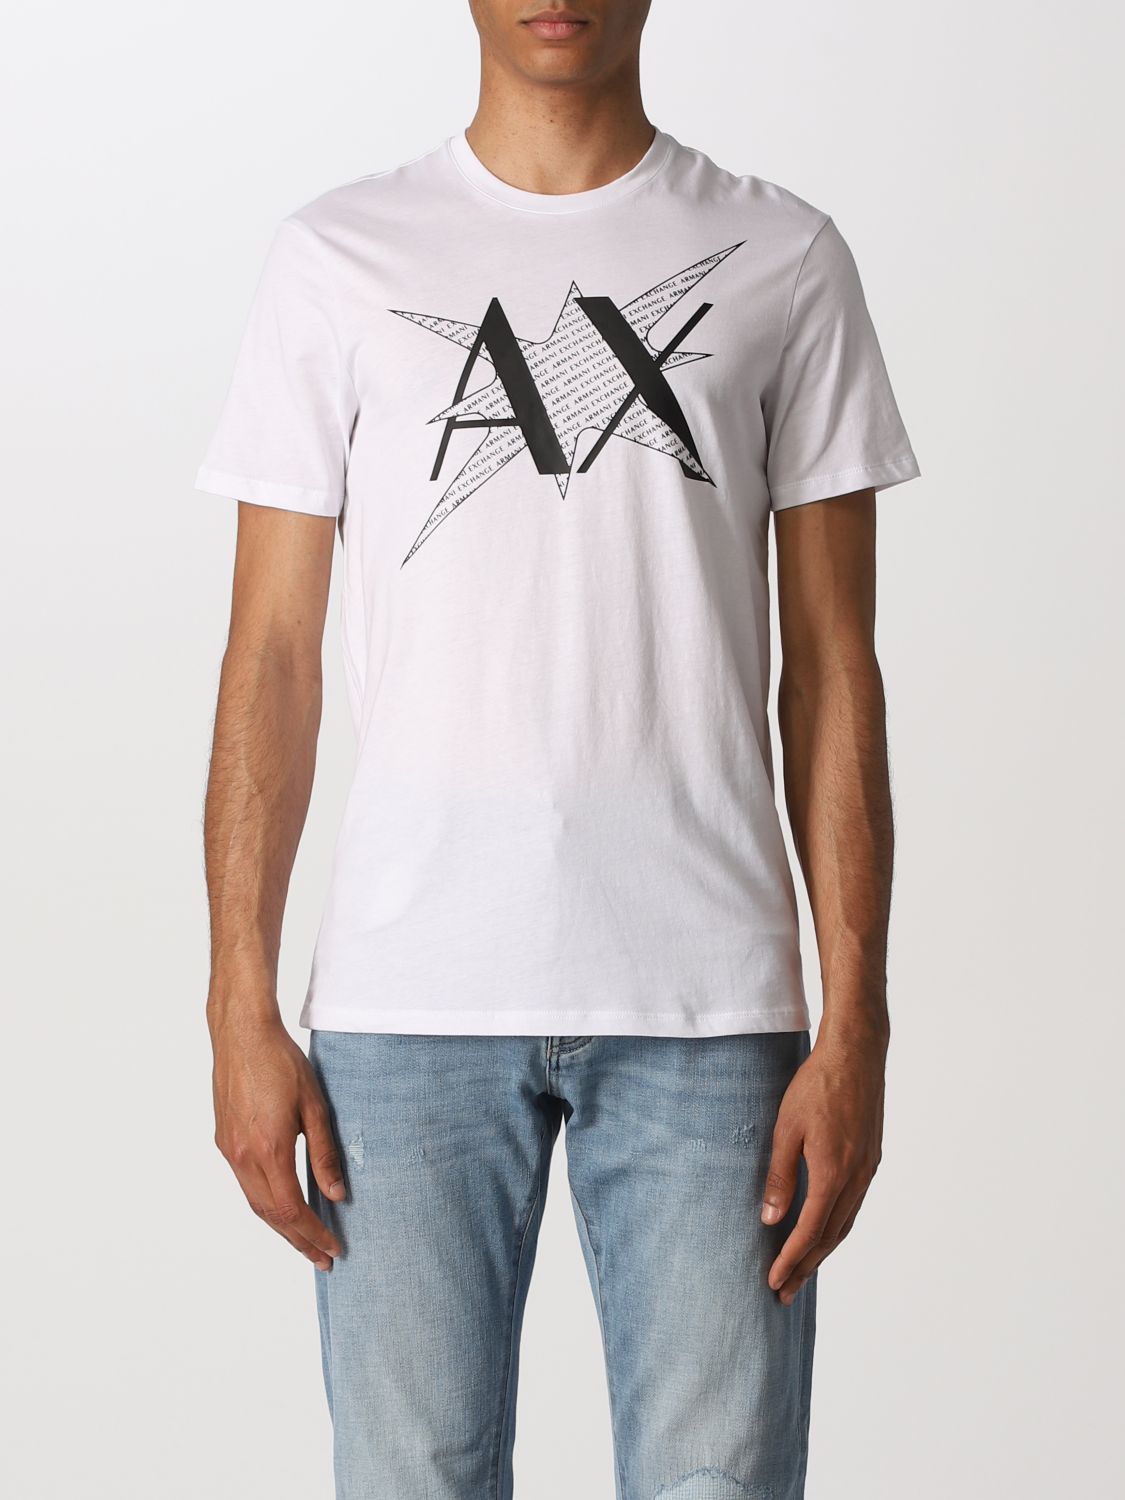 ARMANI EXCHANGE: T-shirt with Ax logo - White | Armani Exchange t-shirt ...